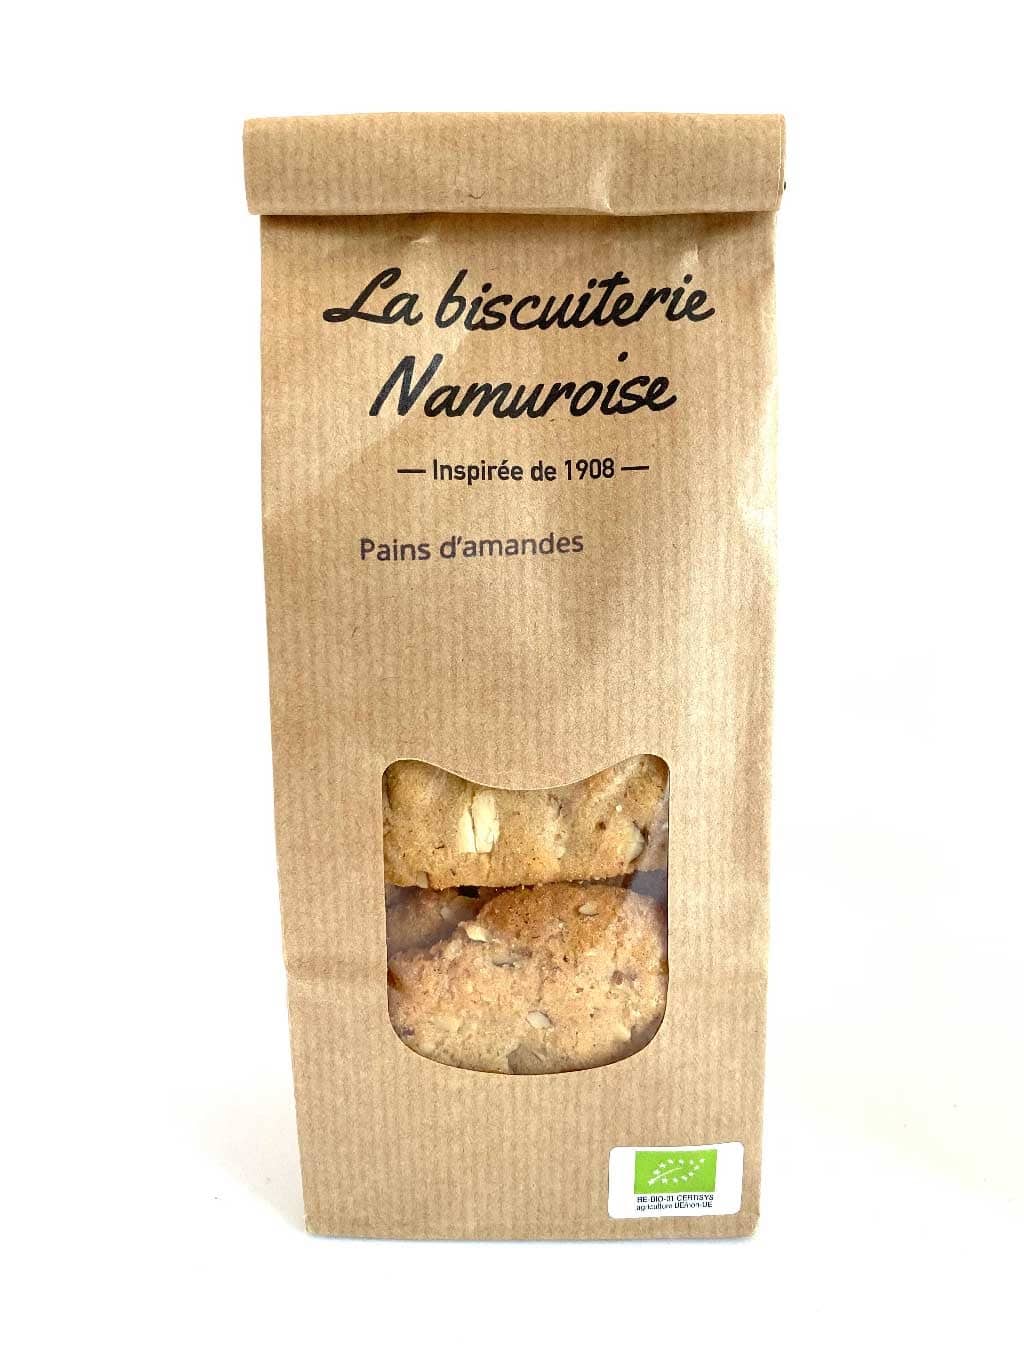 La Biscuiterie Namuroise